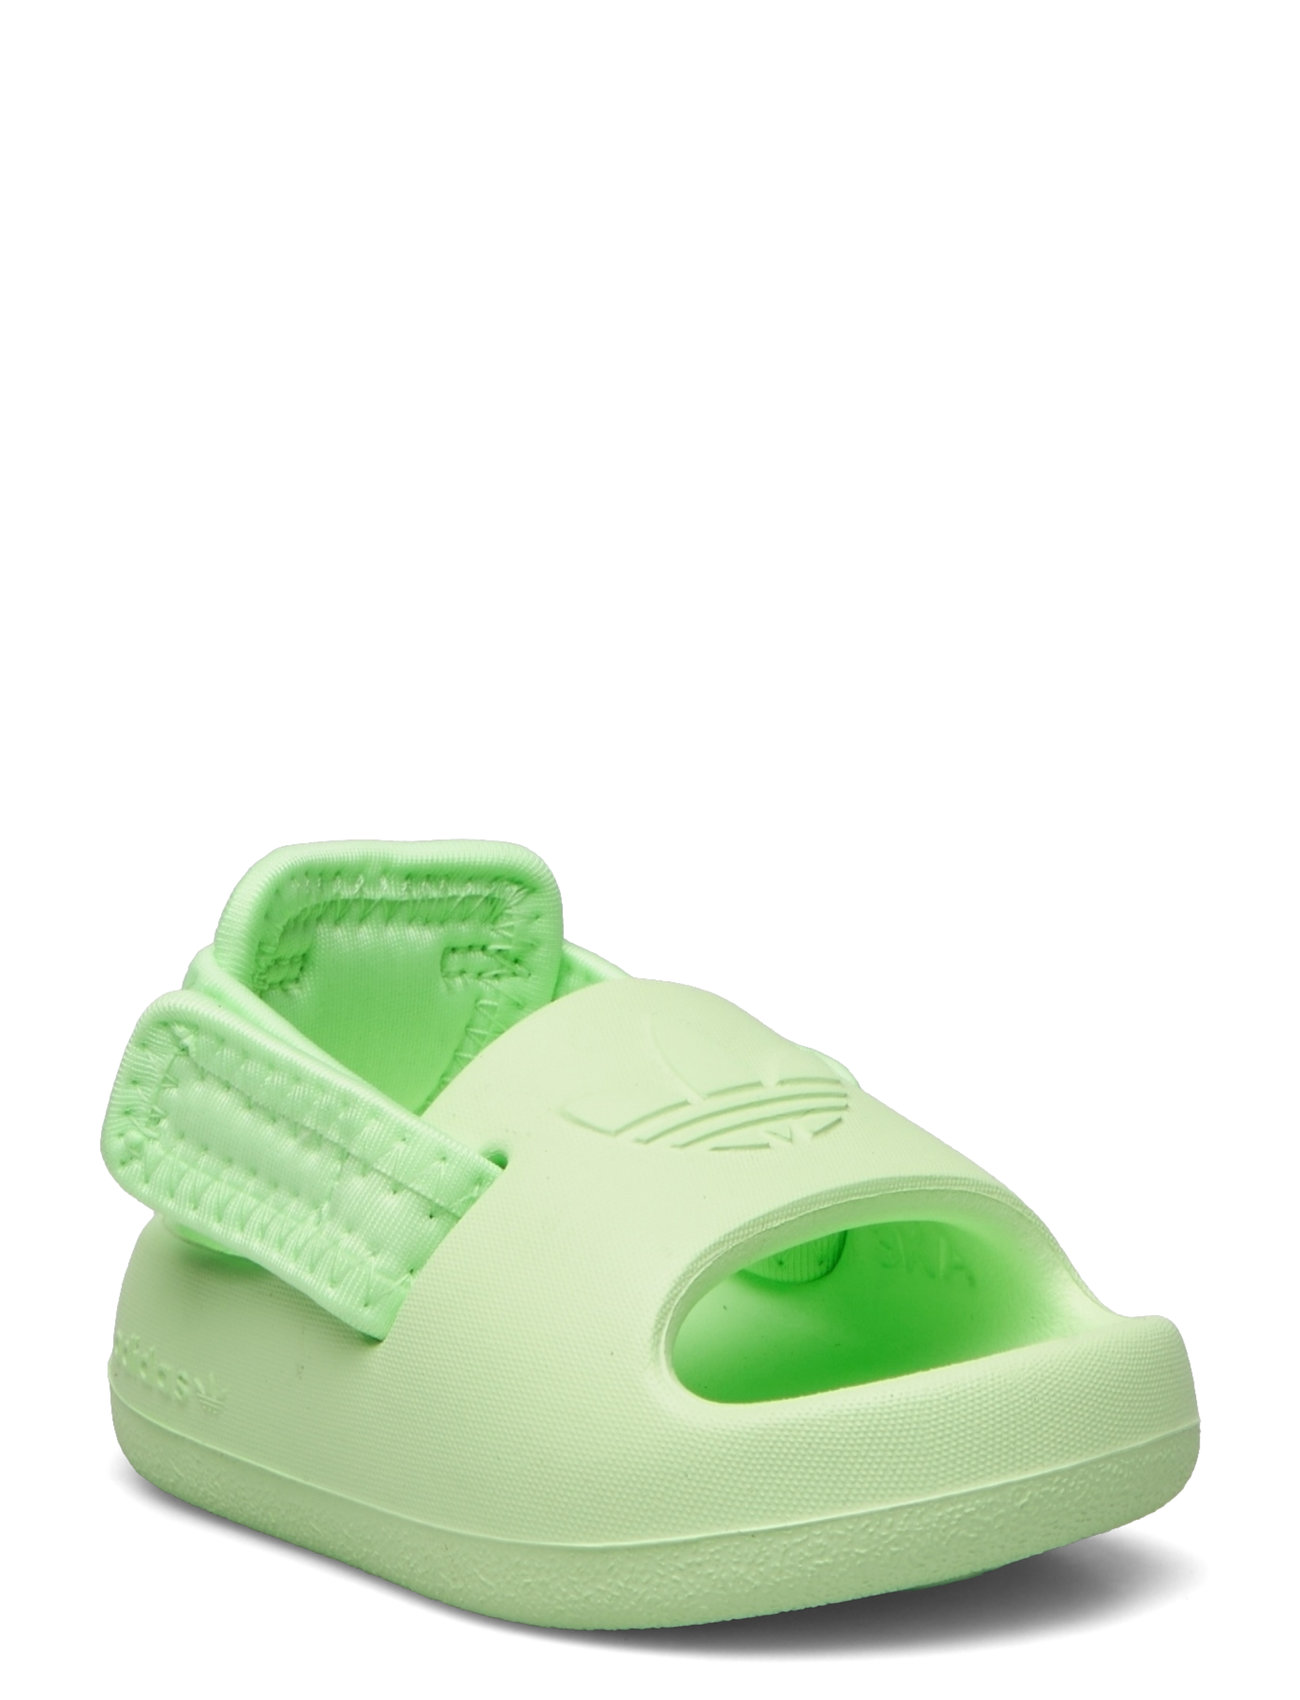 Adifom Adilette I Sport Pre-walkers - Beginner Shoes  Green Adidas Originals